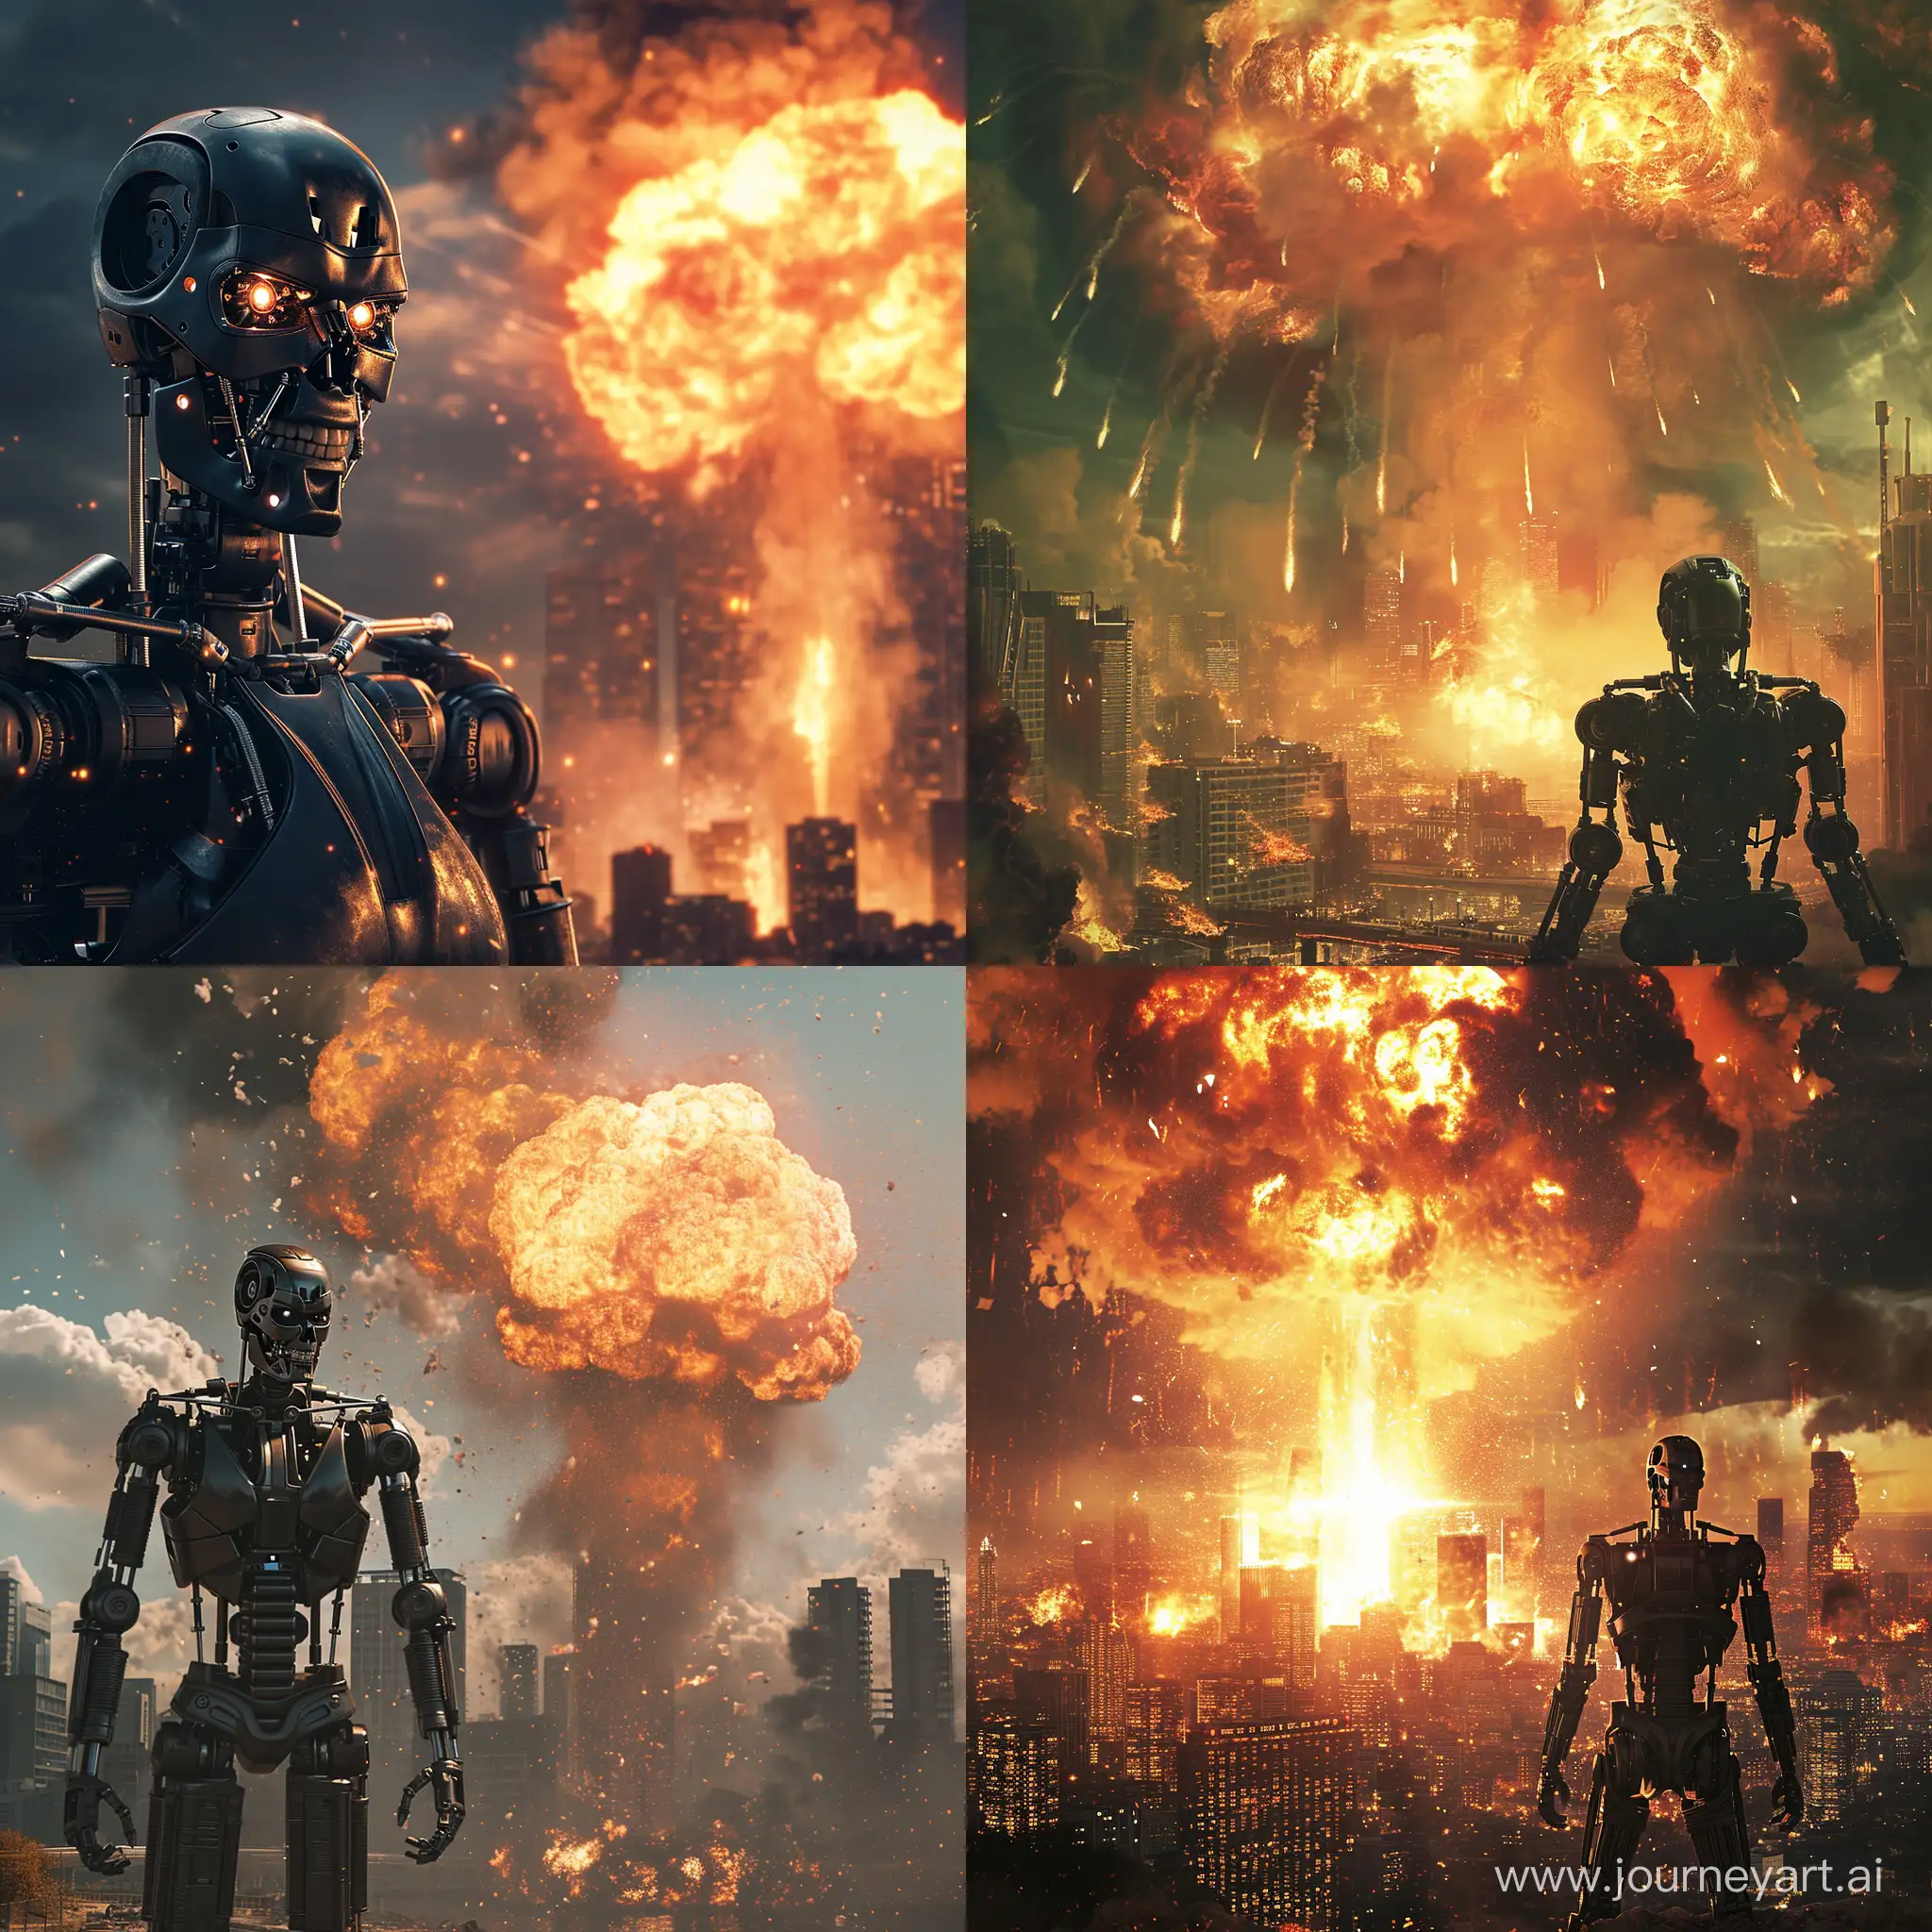 Urban-Apocalypse-with-Terminator-T600-Devastating-Nuclear-Explosion-Scene